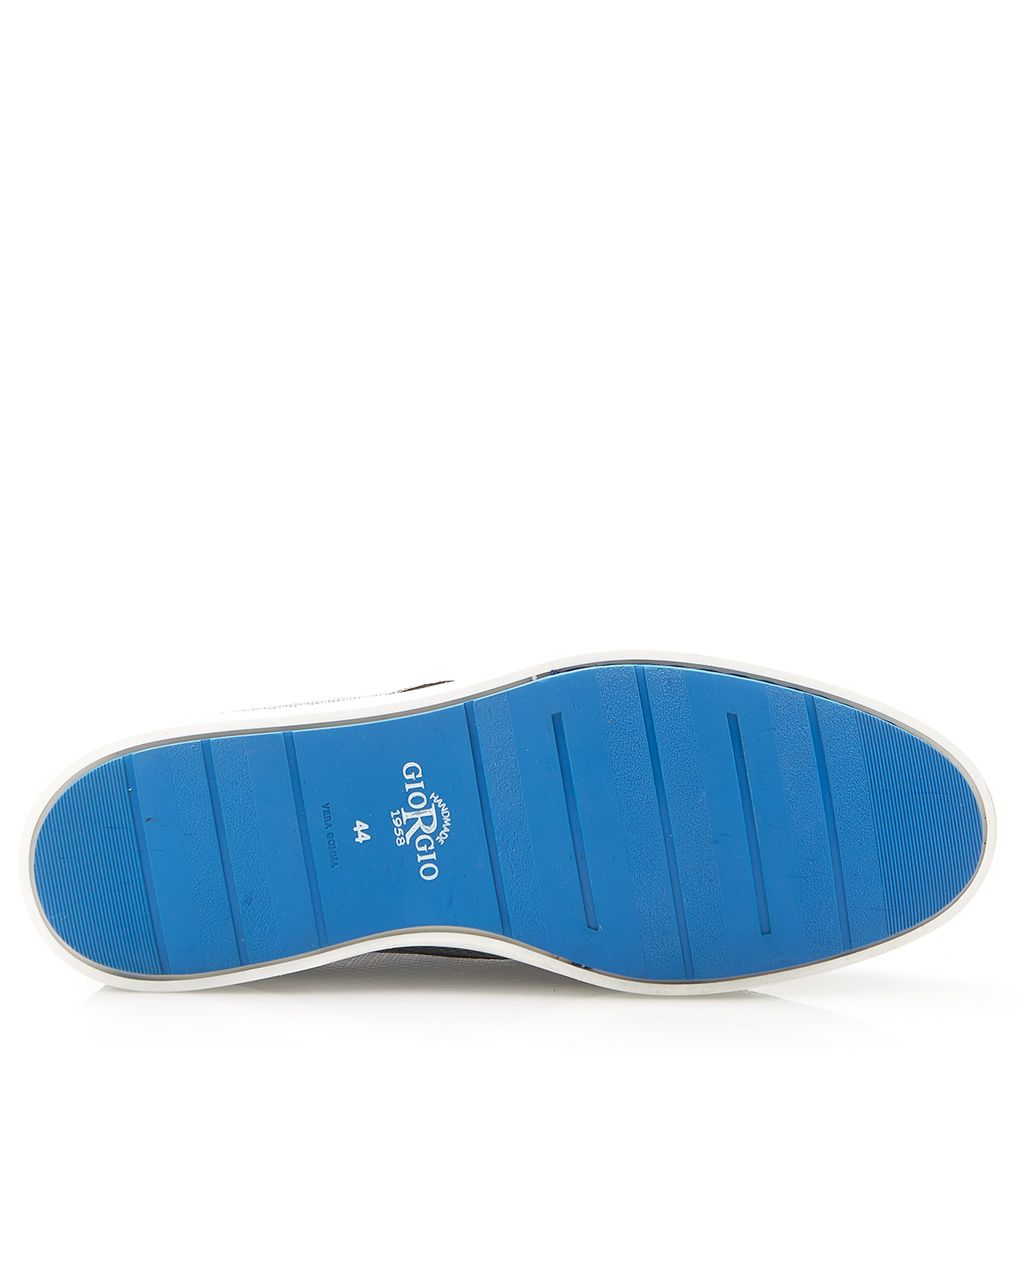 Giorgio Casual schoenen Donker blauw 077130-001-41